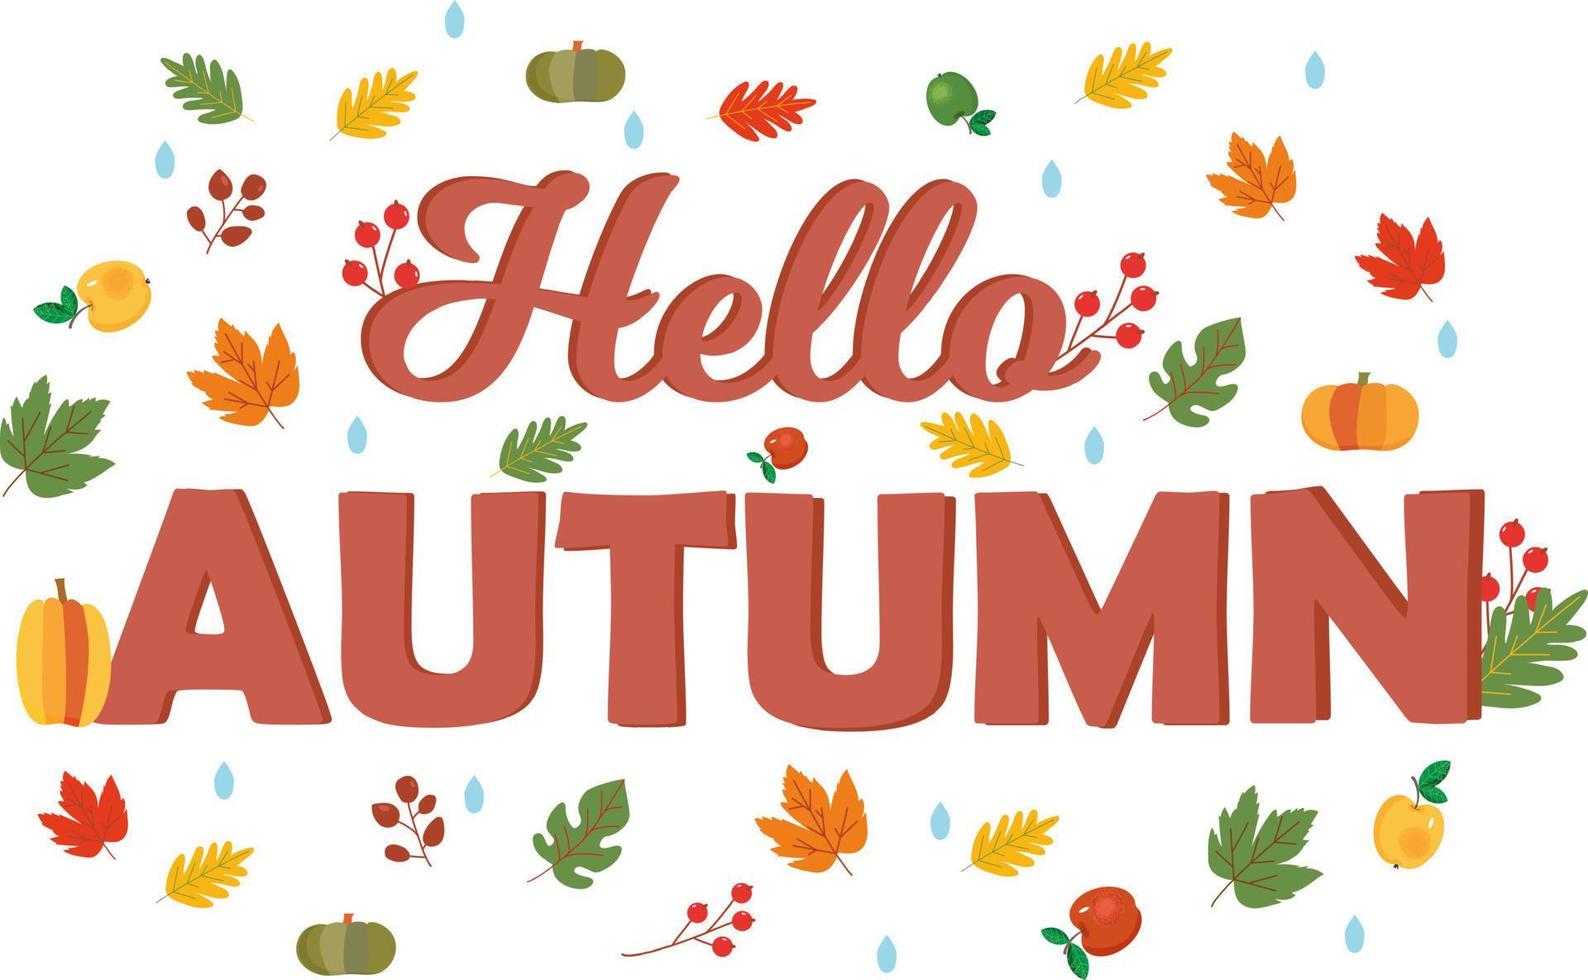 Hallo autumn banner. Inscription Hello autumn with colourfull autumn leaves, pumpkins, apples, berries, rain drops. Autumn mood. Vector illustration in flat style. White background.